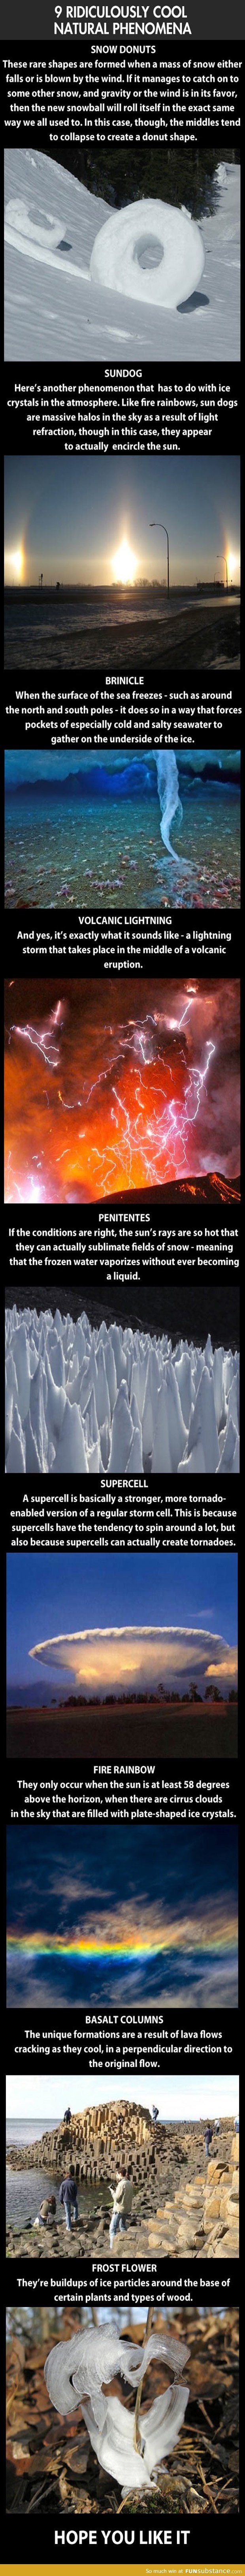 9 ridiculously cool natural phenomena